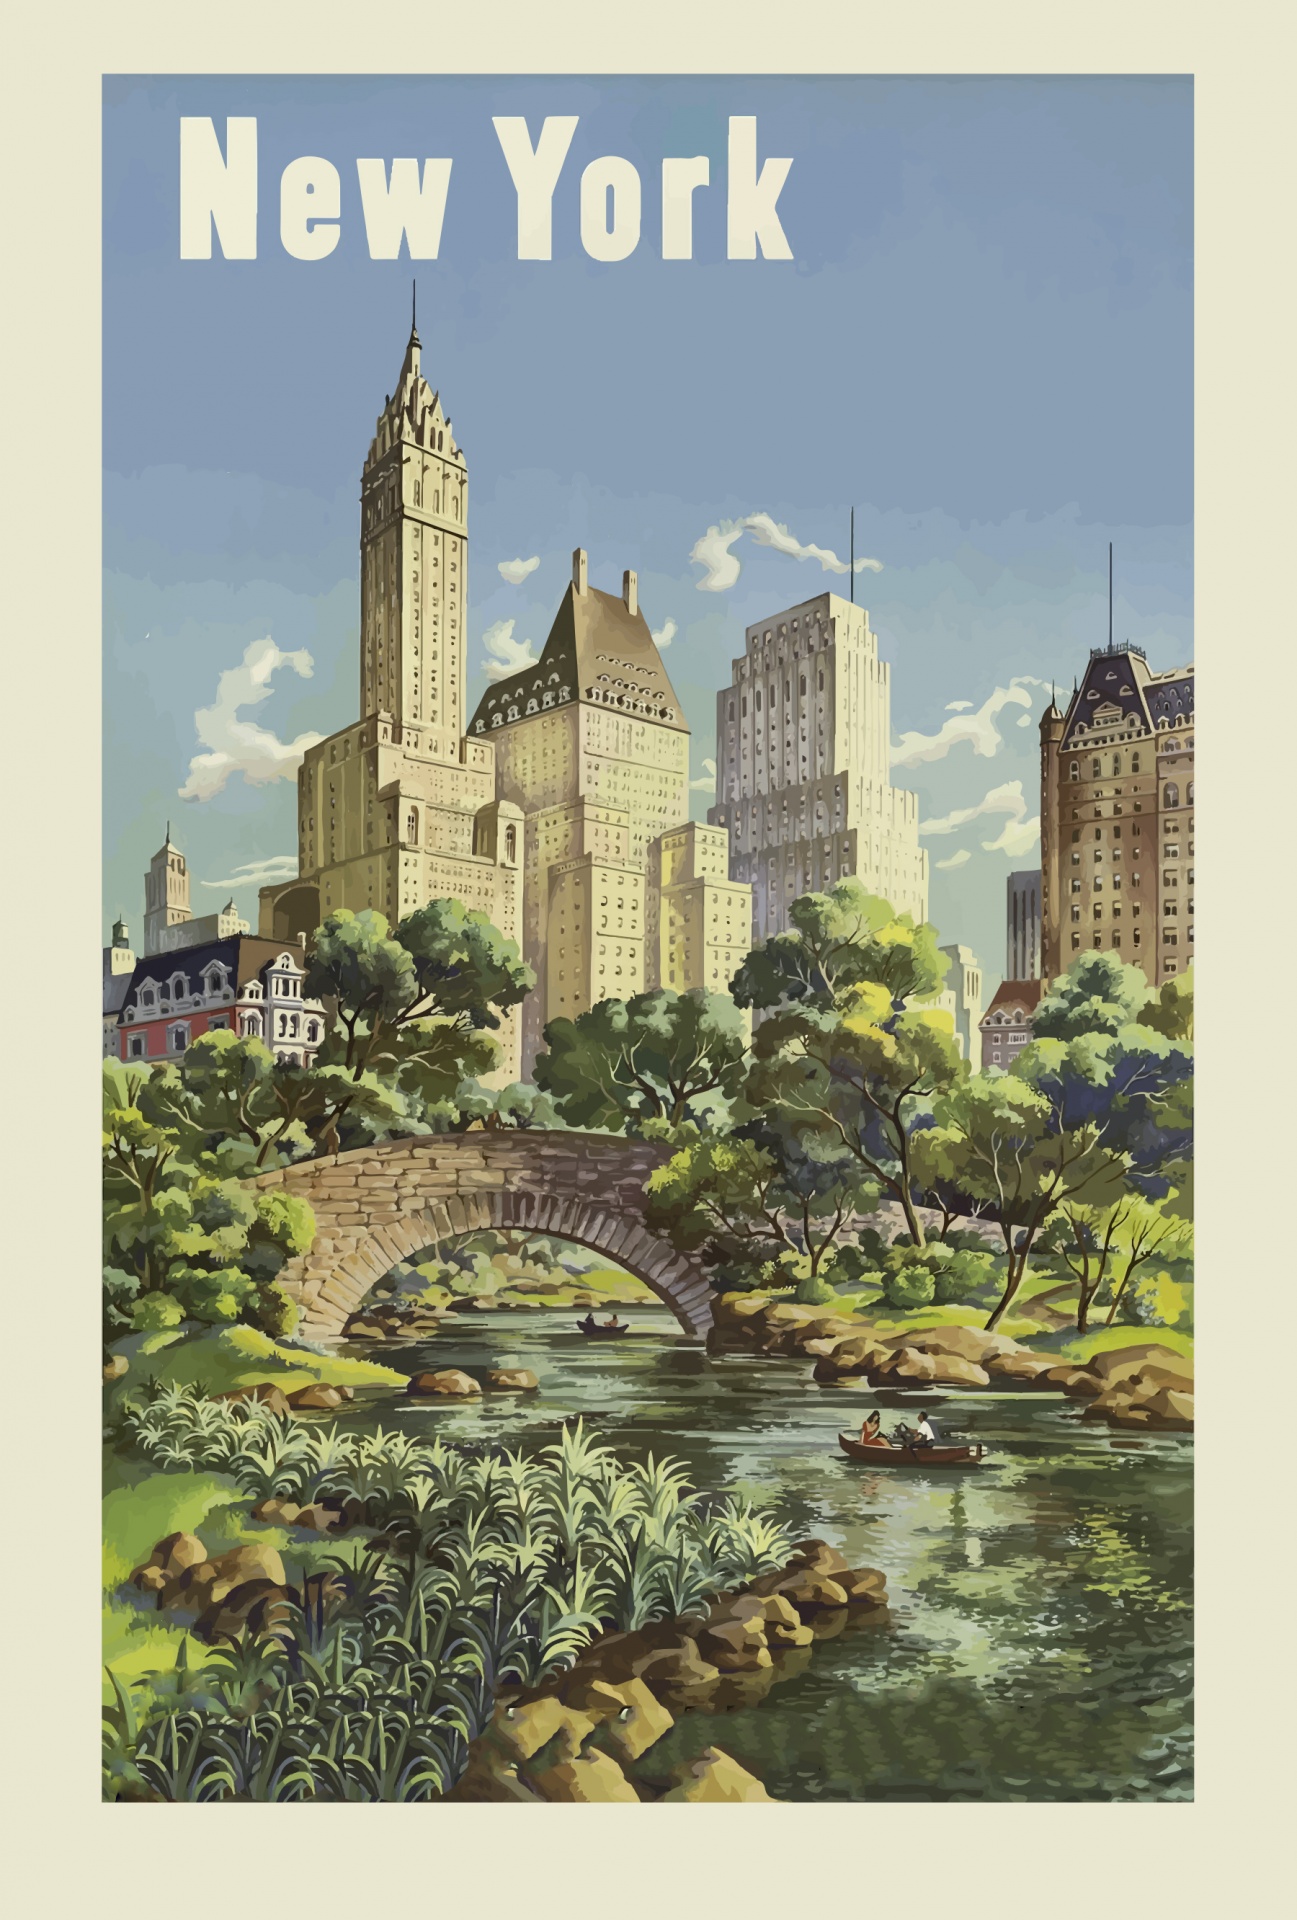 Vintage travel poster remix of New York